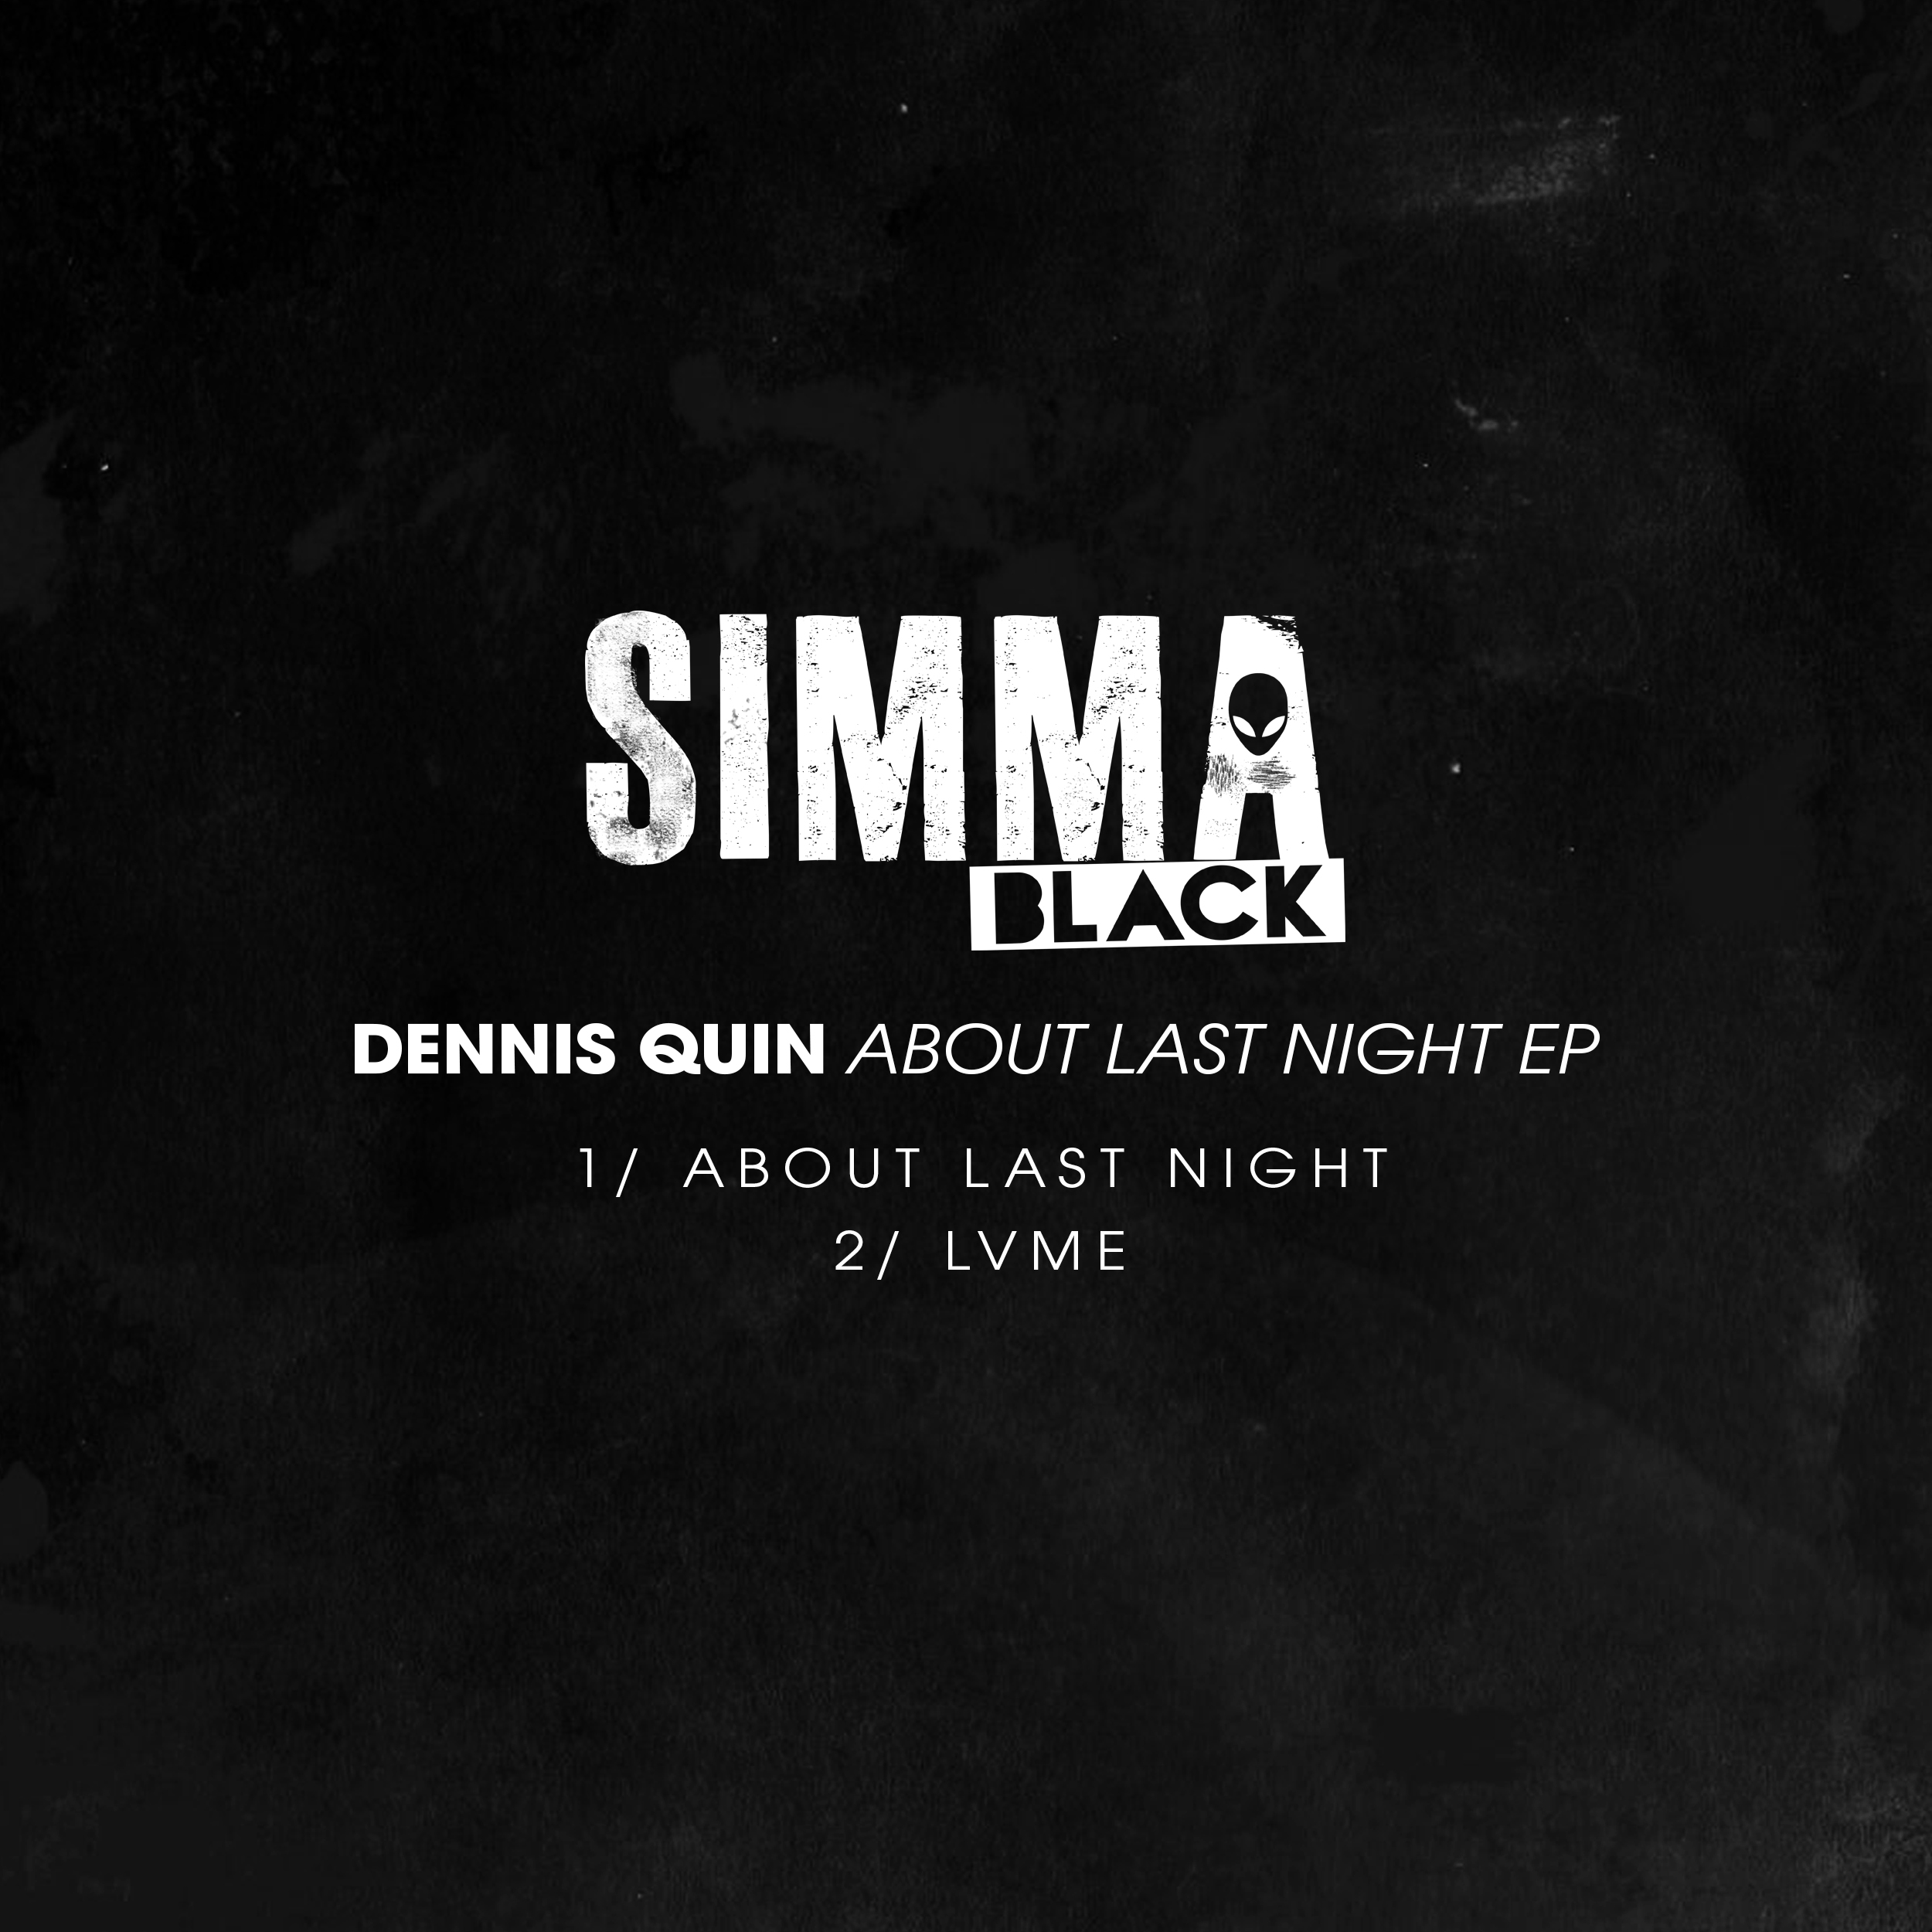 Dennis Quin - About Last Night EP / Simma Black